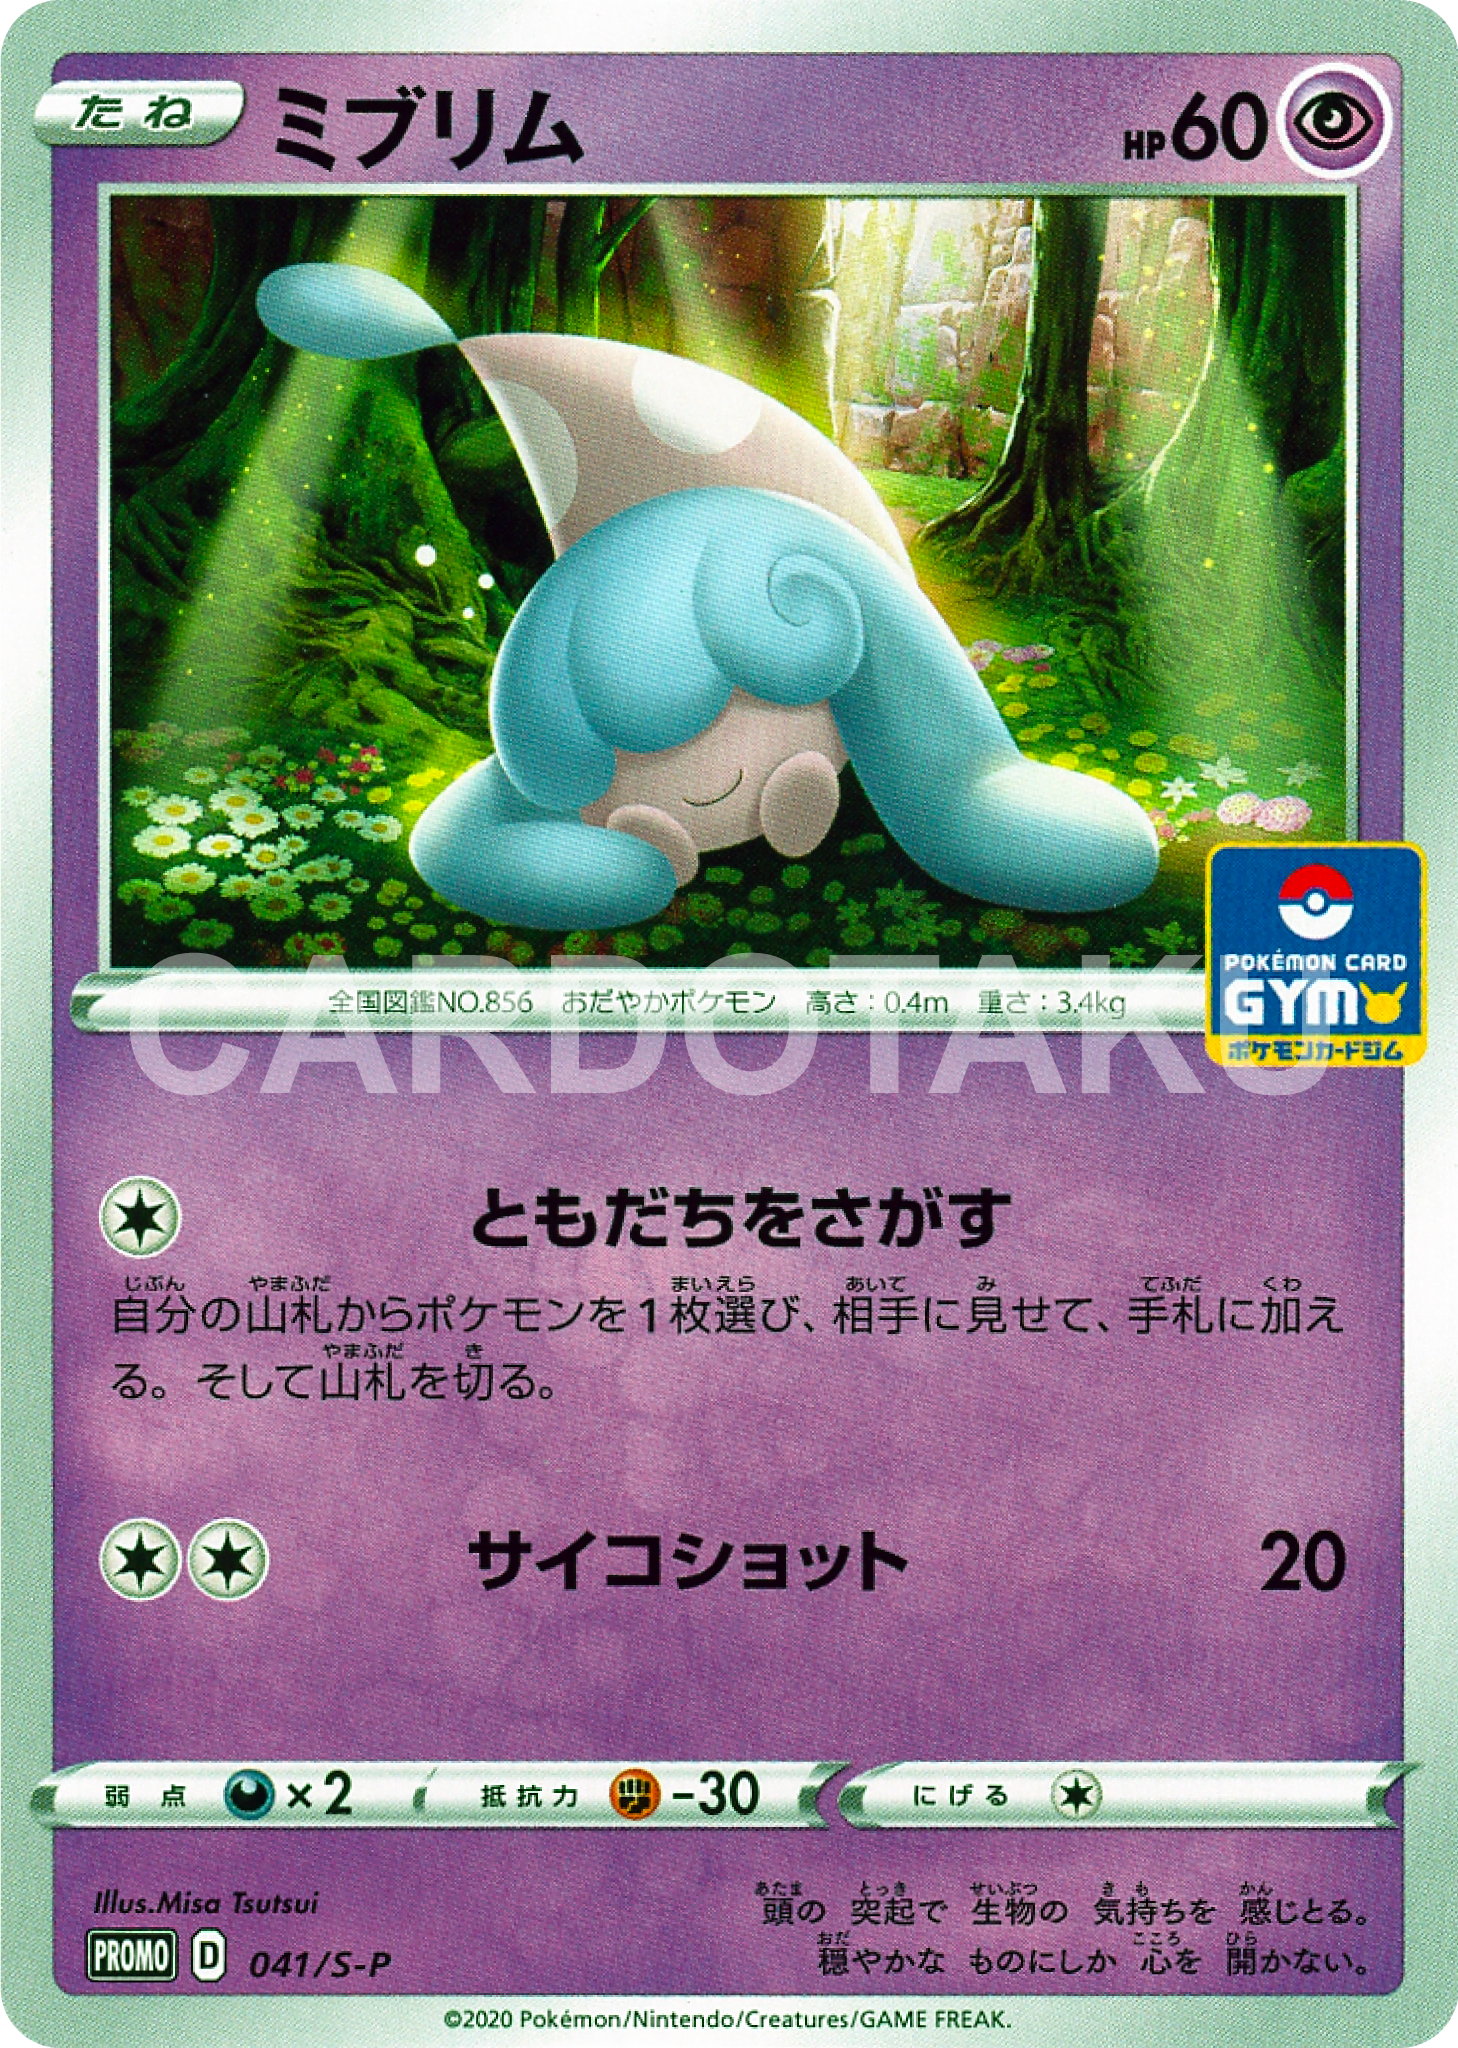 Pokémon Card Game Sword & Shield PROMO 041/S-P POKÉMON CARD GYM promo card pack #2 March 6 2020 Hatenna